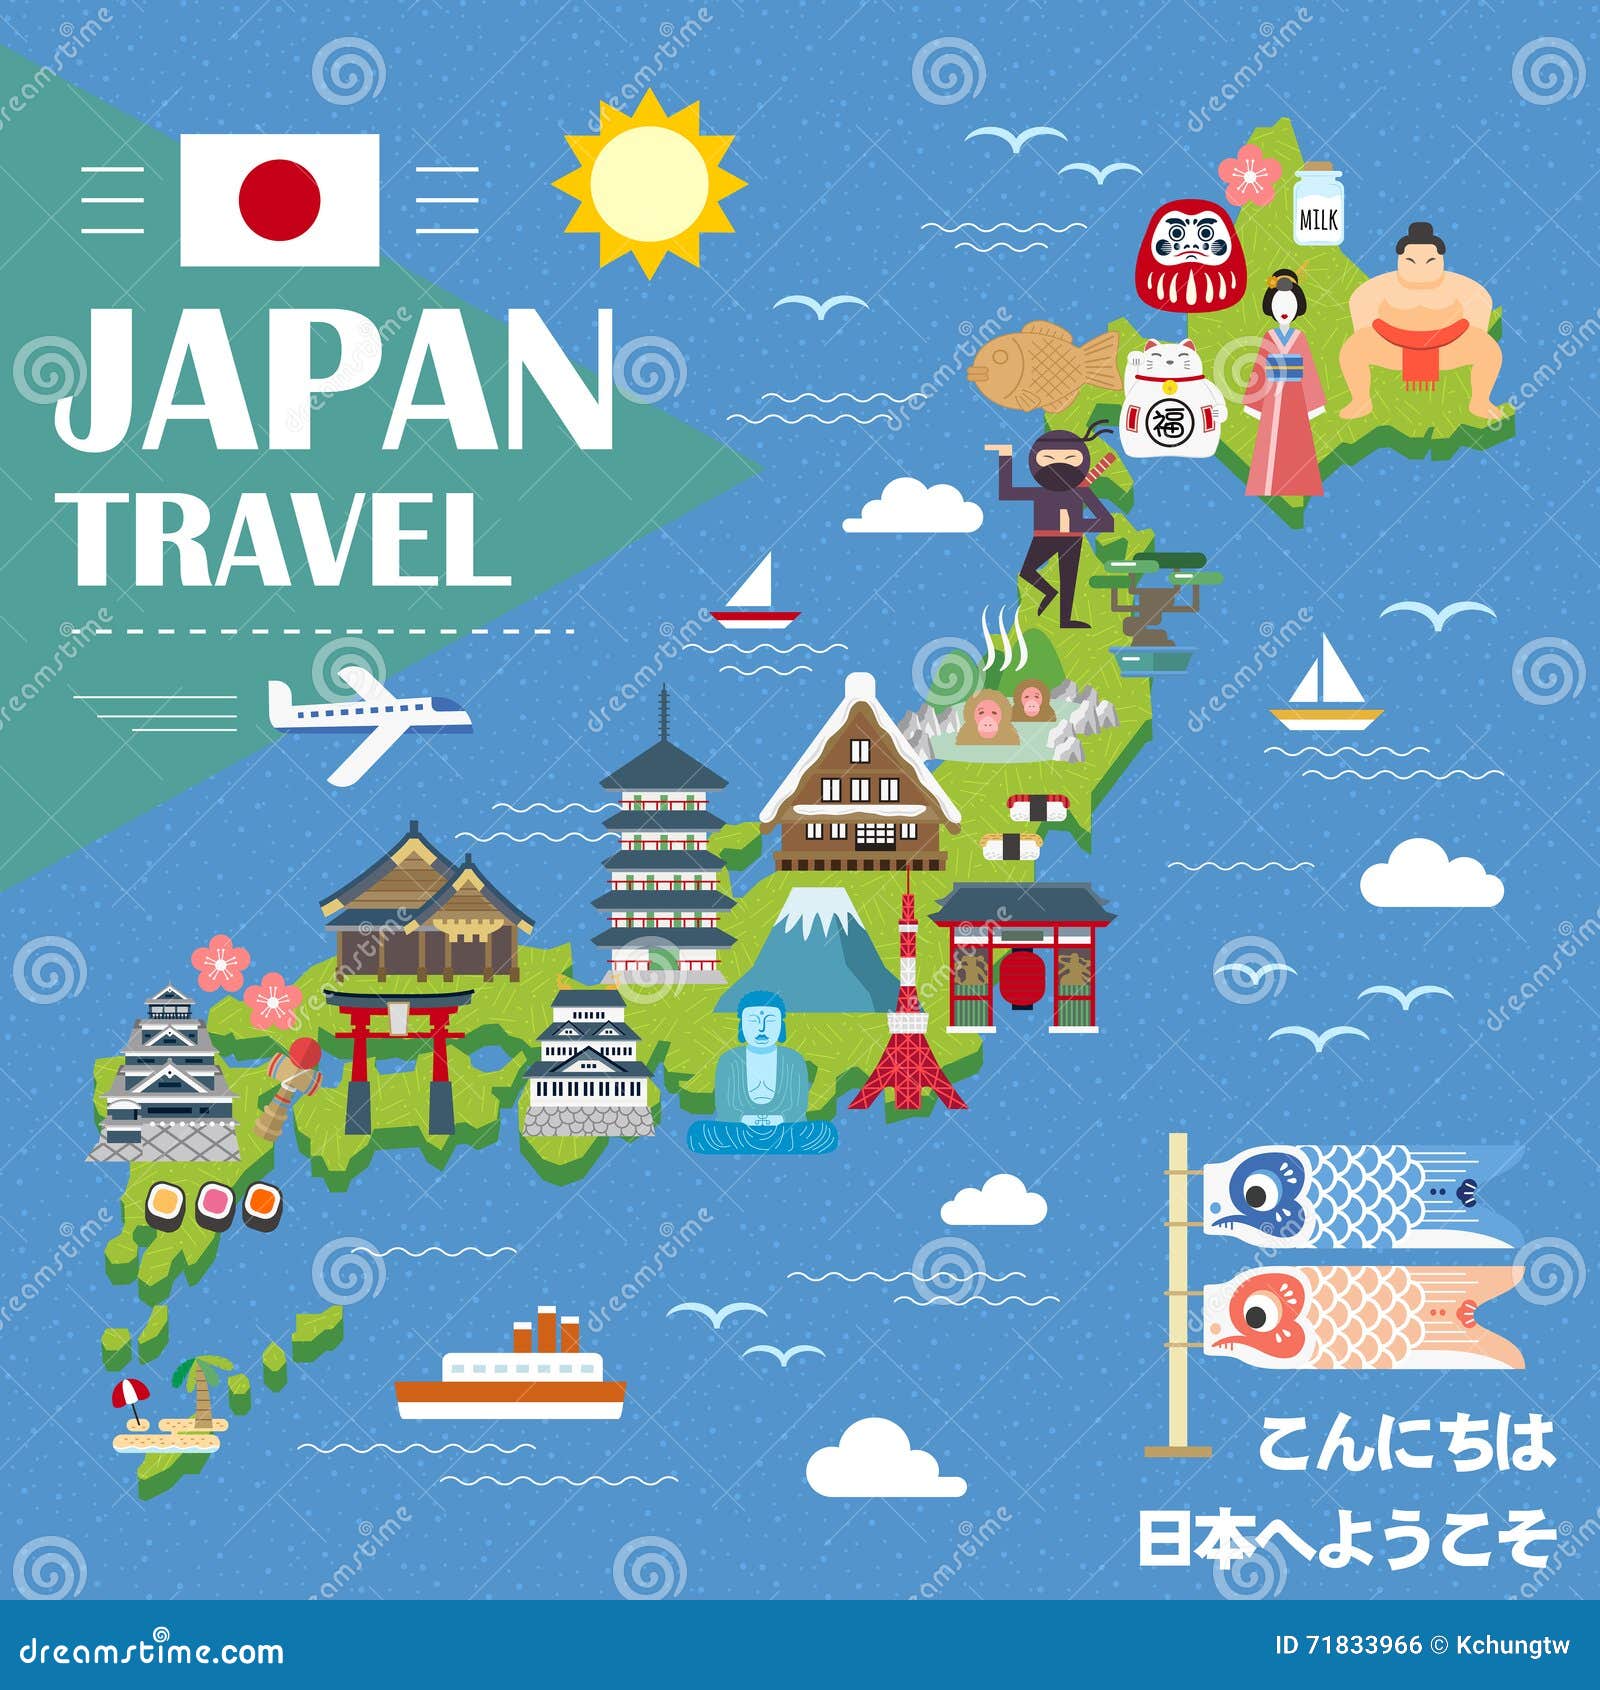 Japan travel map stock illustration. Illustration of traveler - 71833966